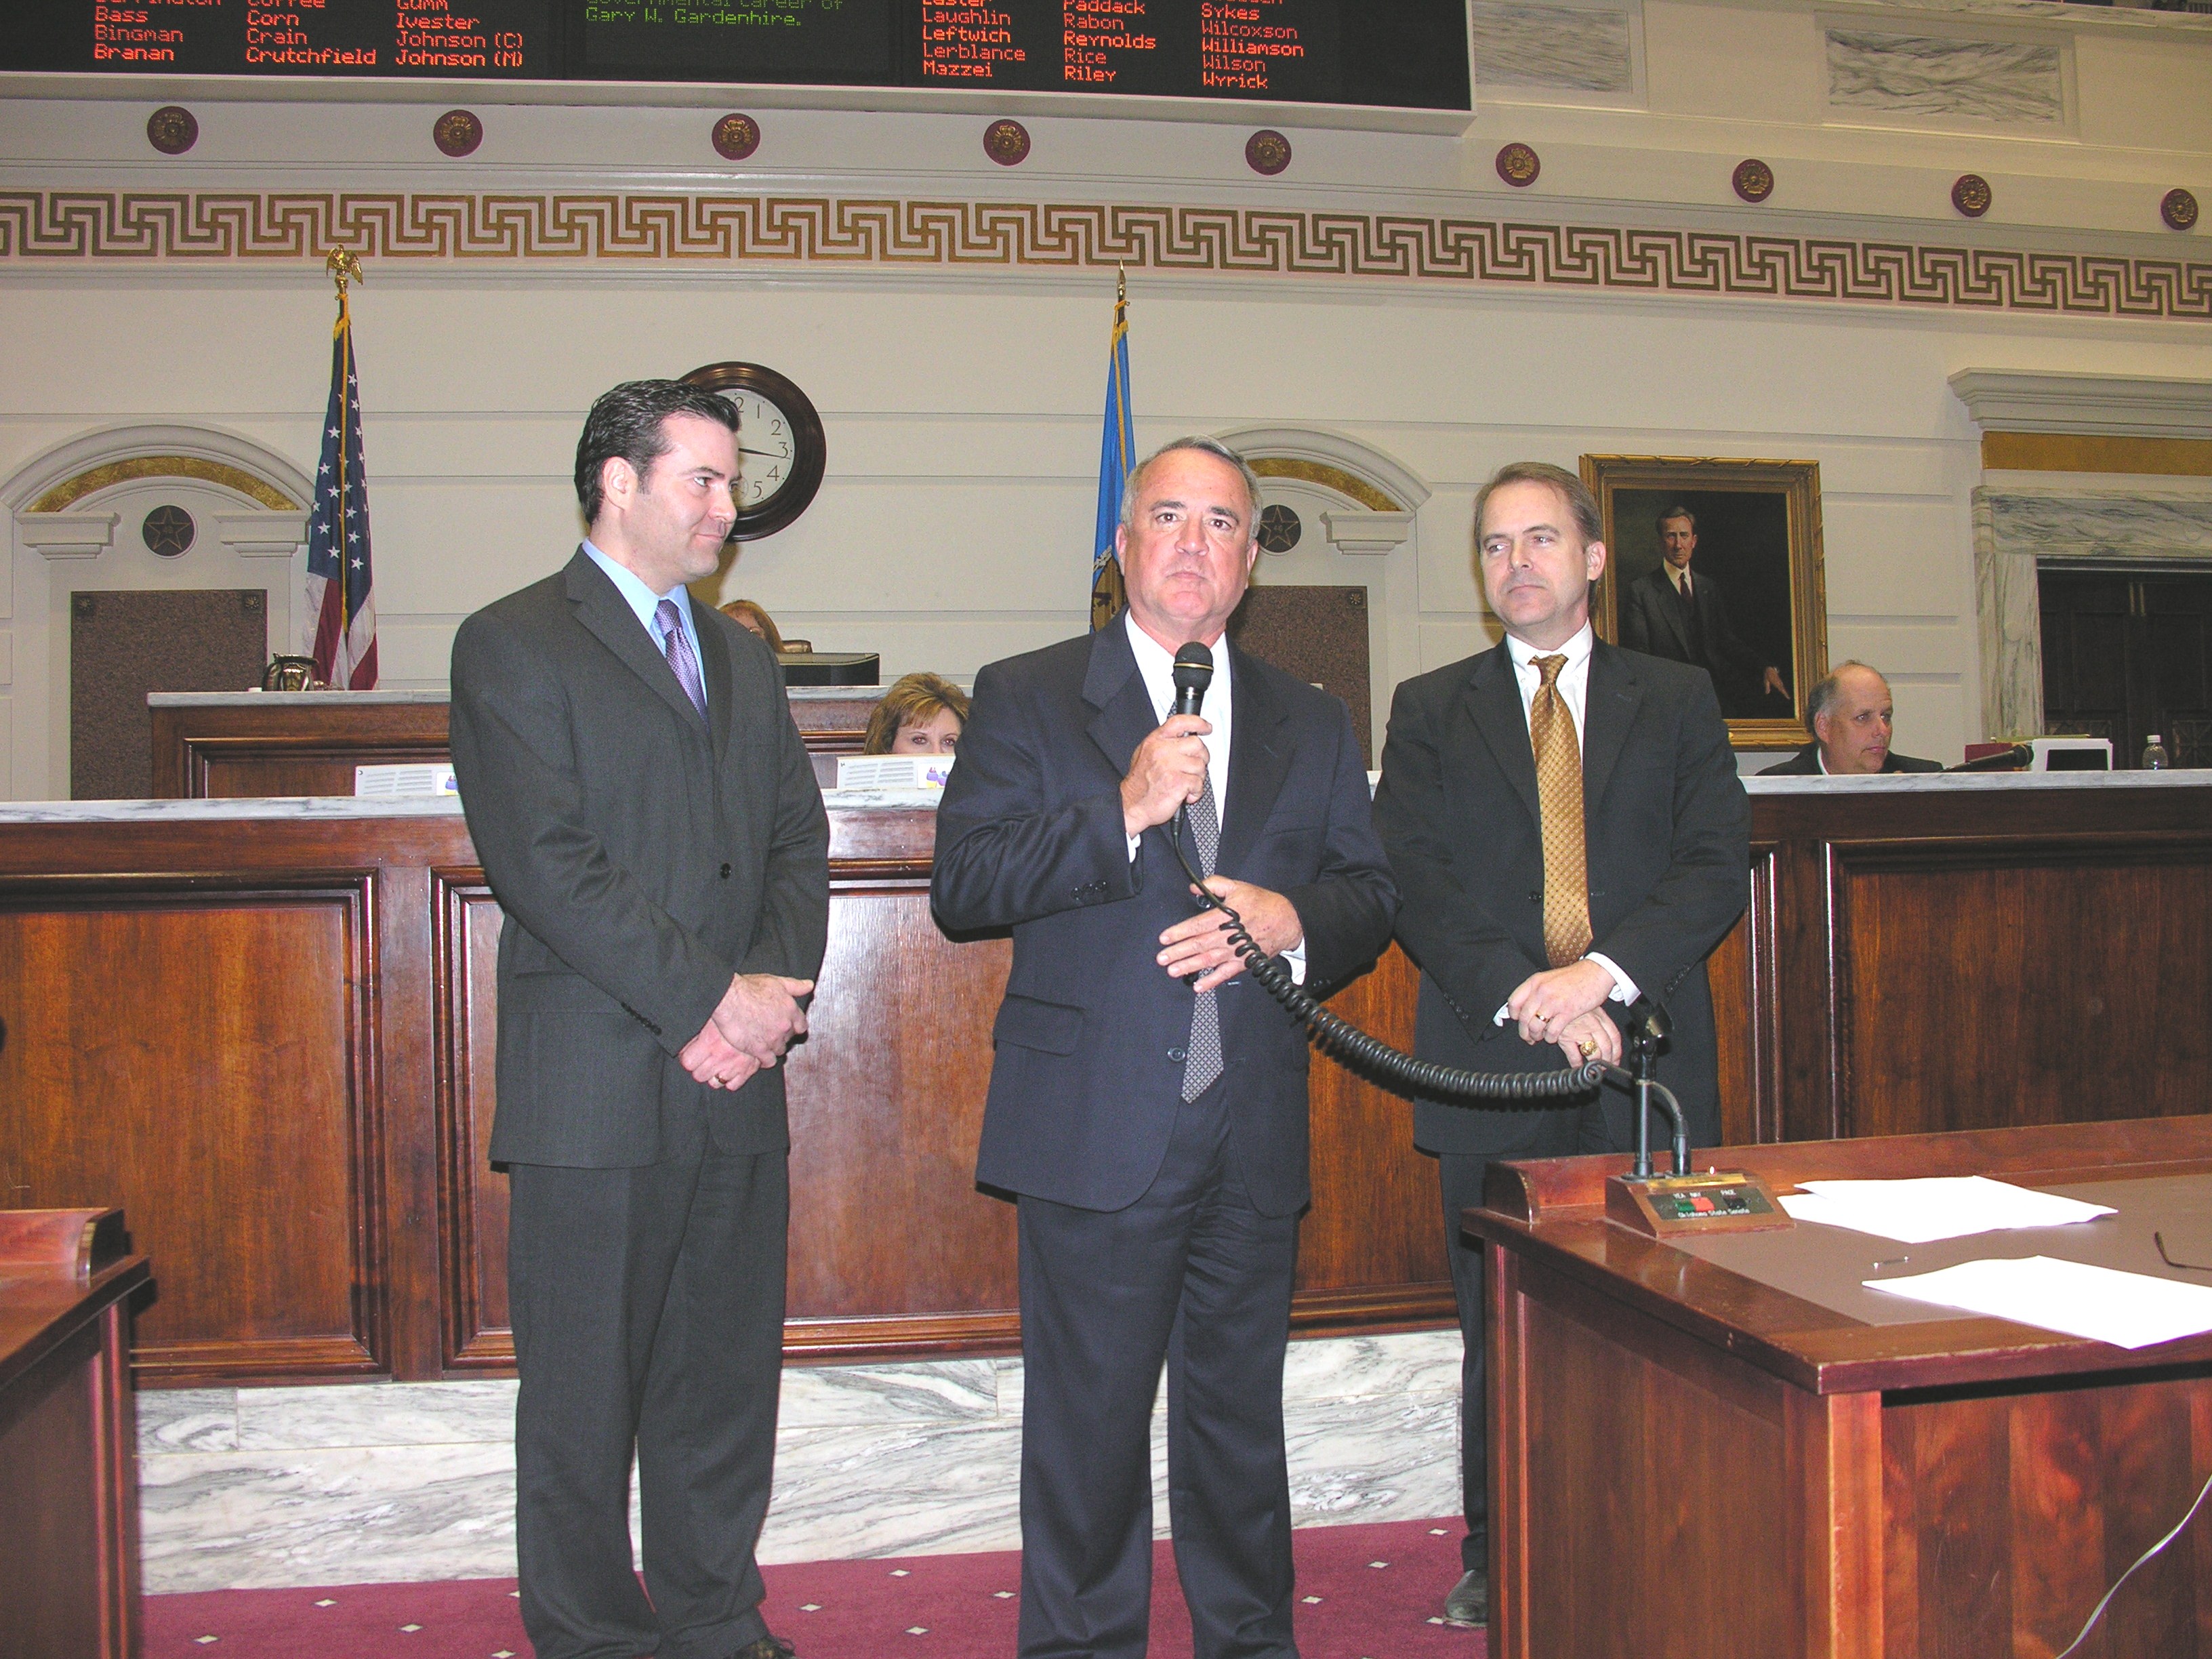 Former Senator Gary Gardenhire addresses the State Senate on Wednesday, with Senator Jonathan Nichols at right and son Damon Gardenhire on left.